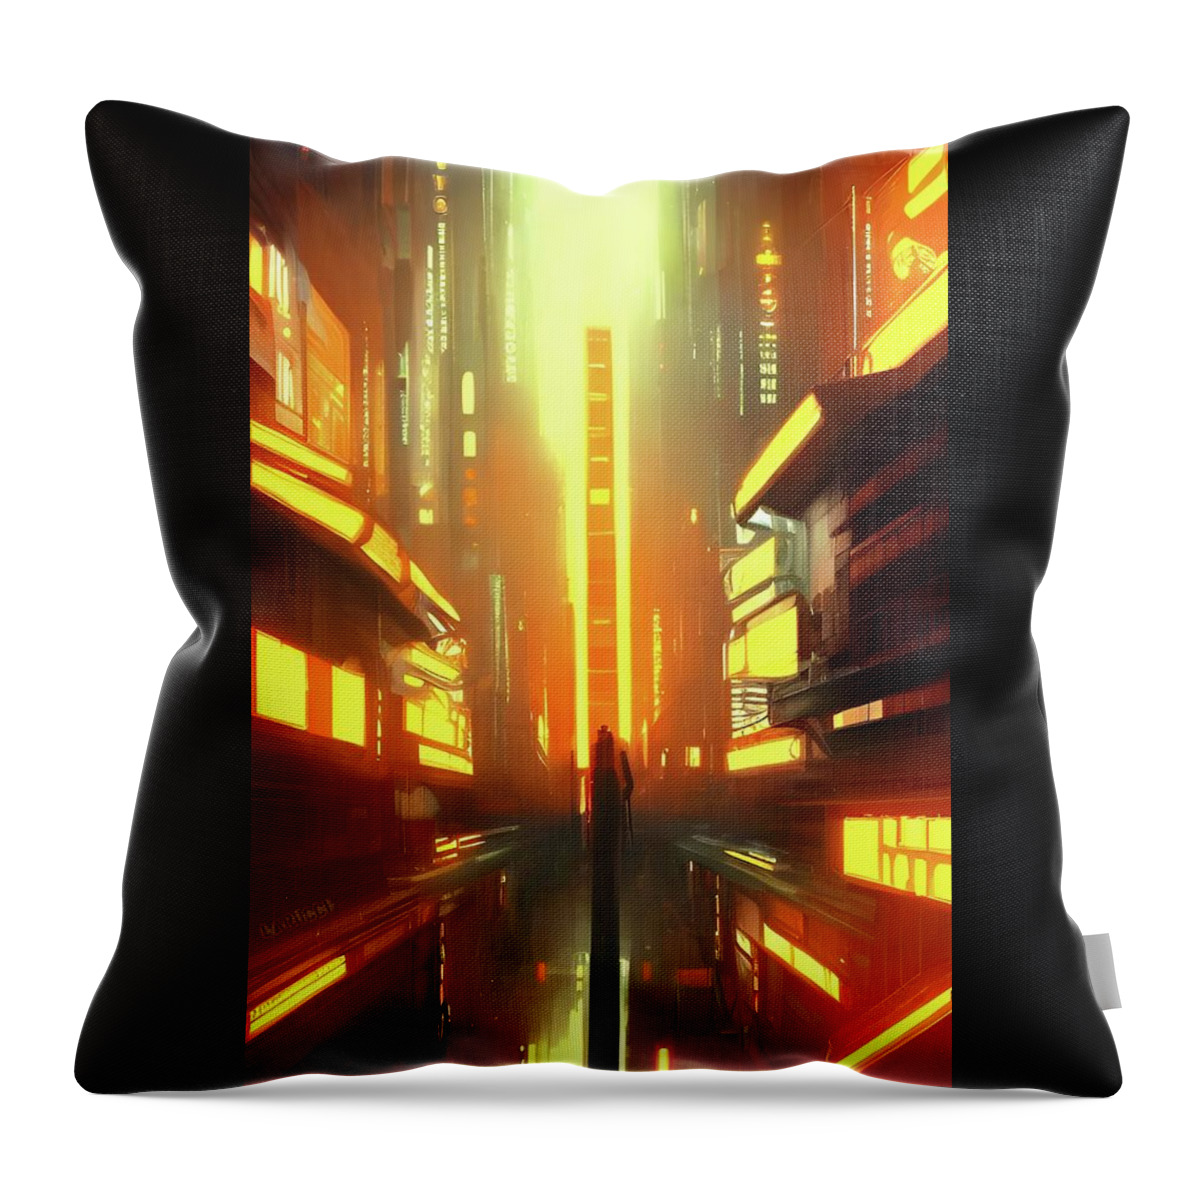 Blade Runner Throw Pillow featuring the digital art Blade Runner Nexus 11 by Fred Larucci